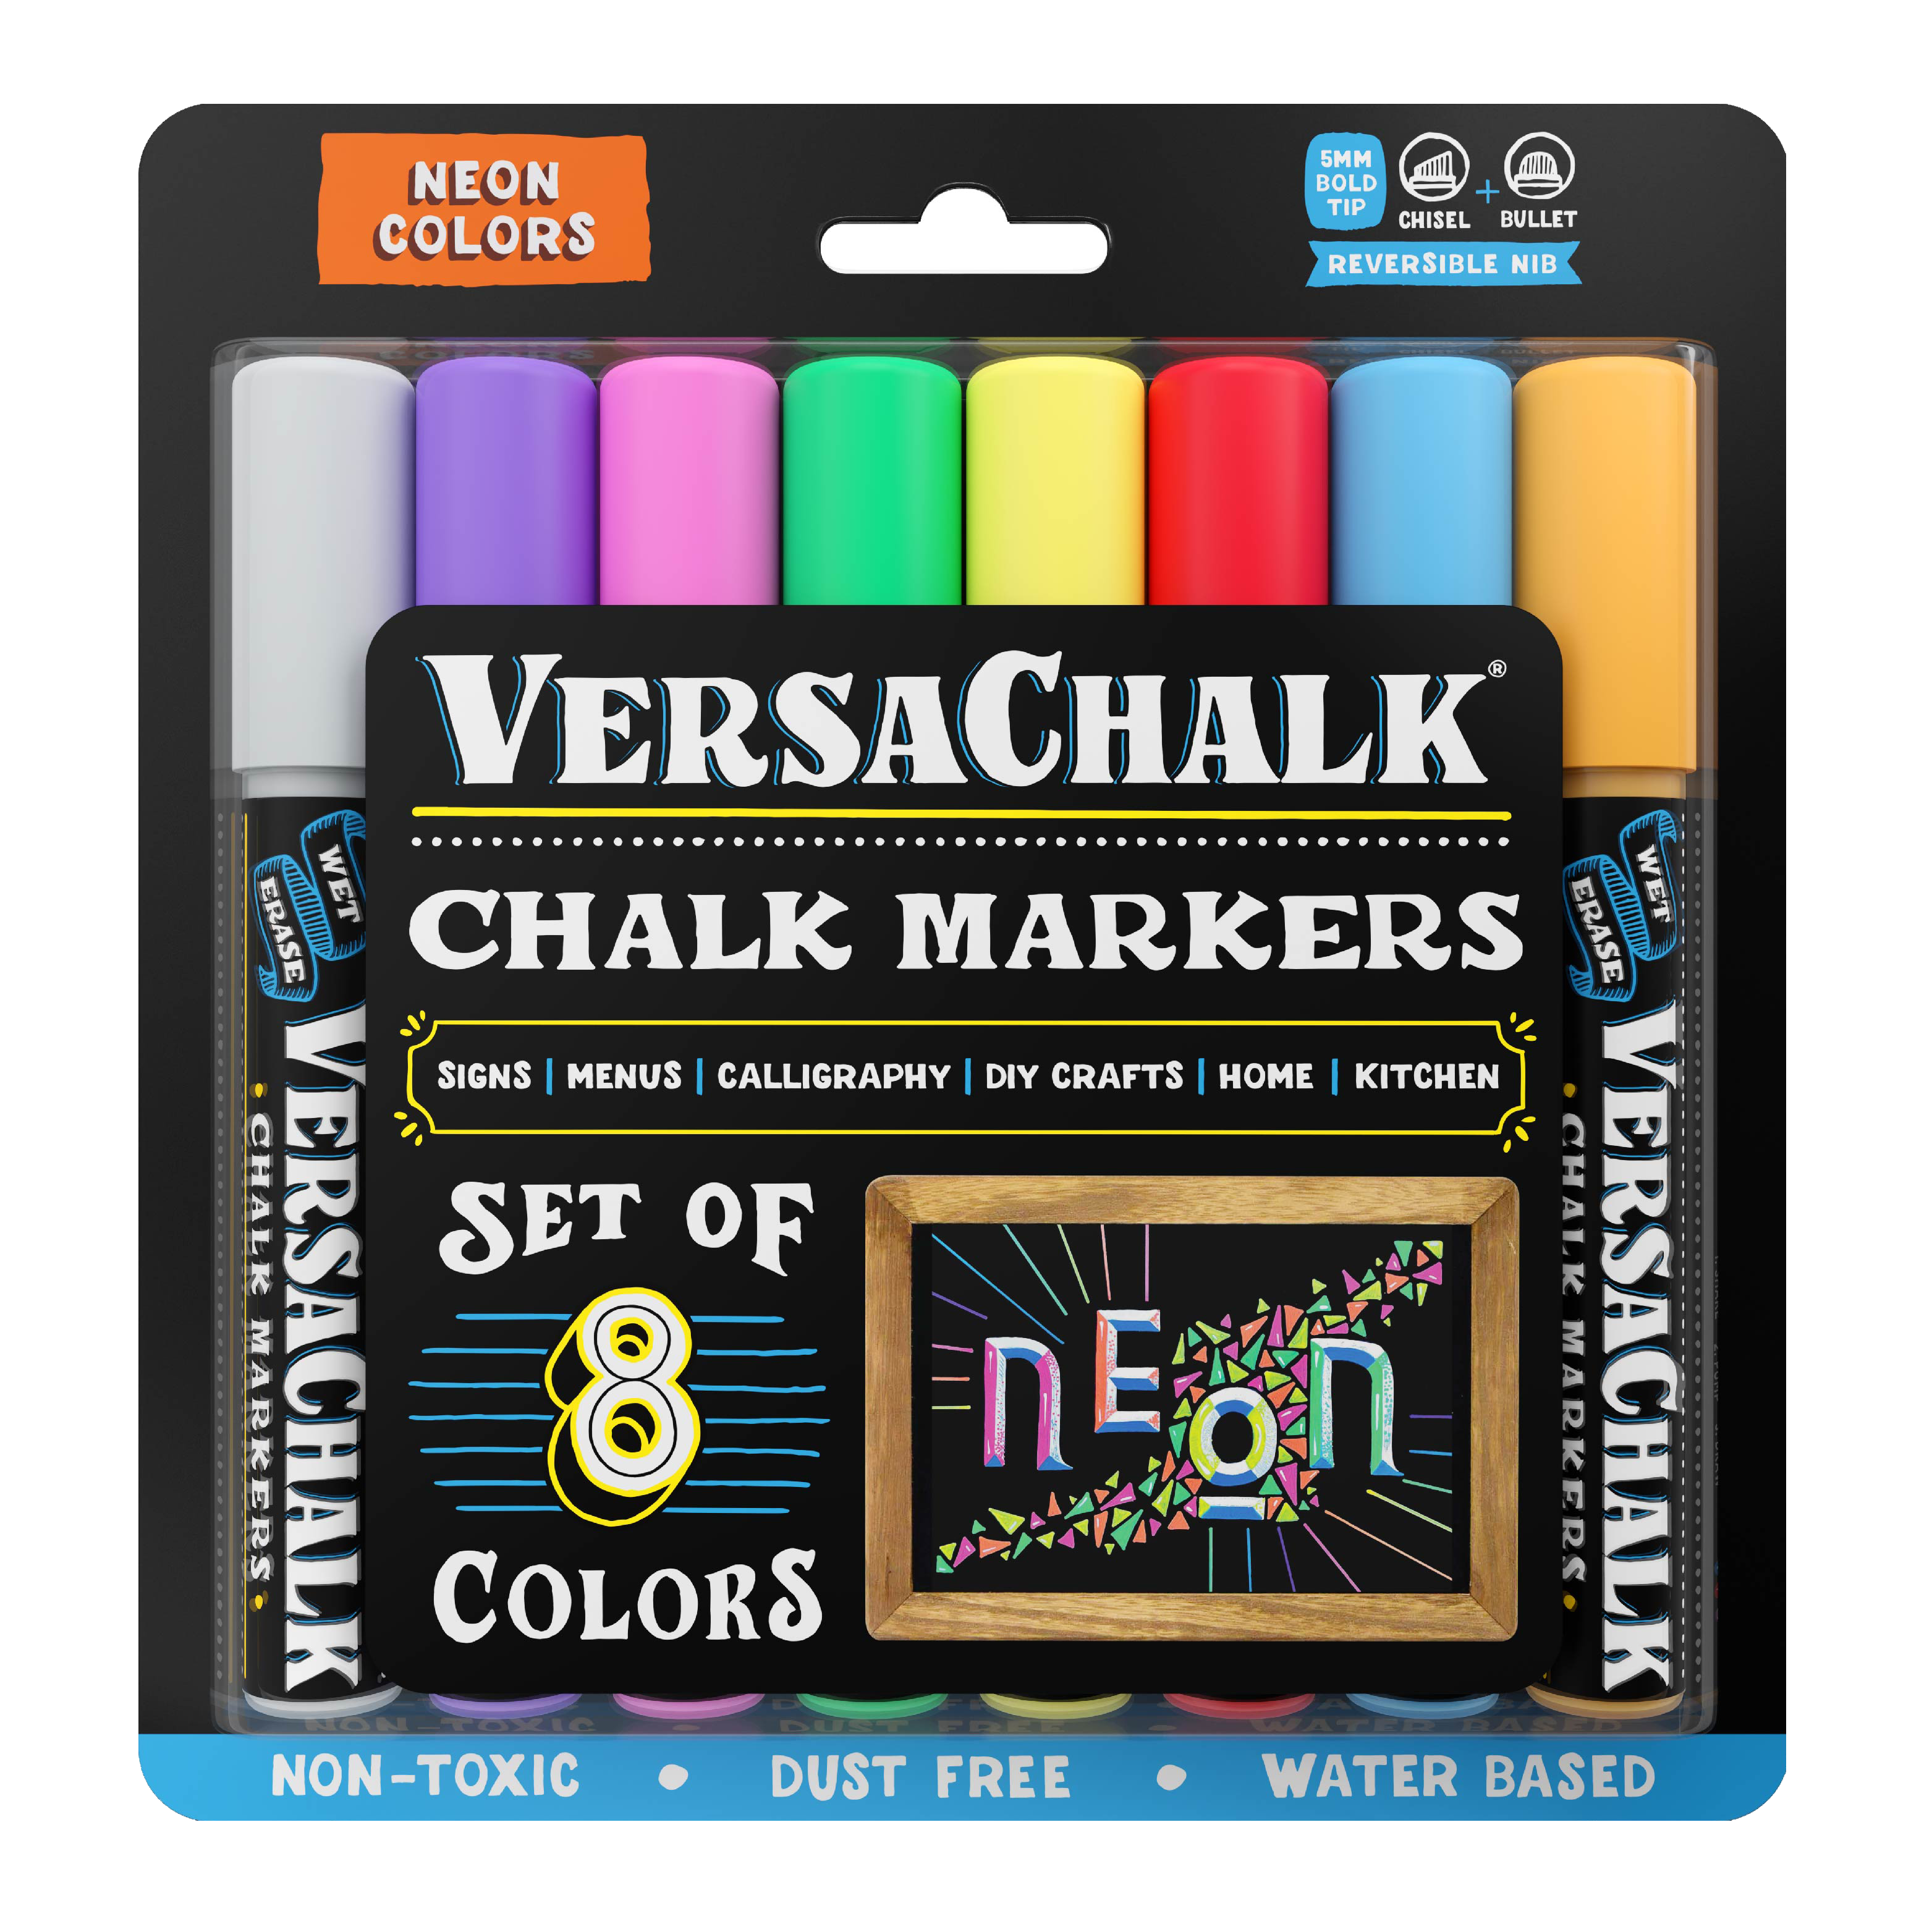 Neon Liquid Chalk Markers - Set of 6